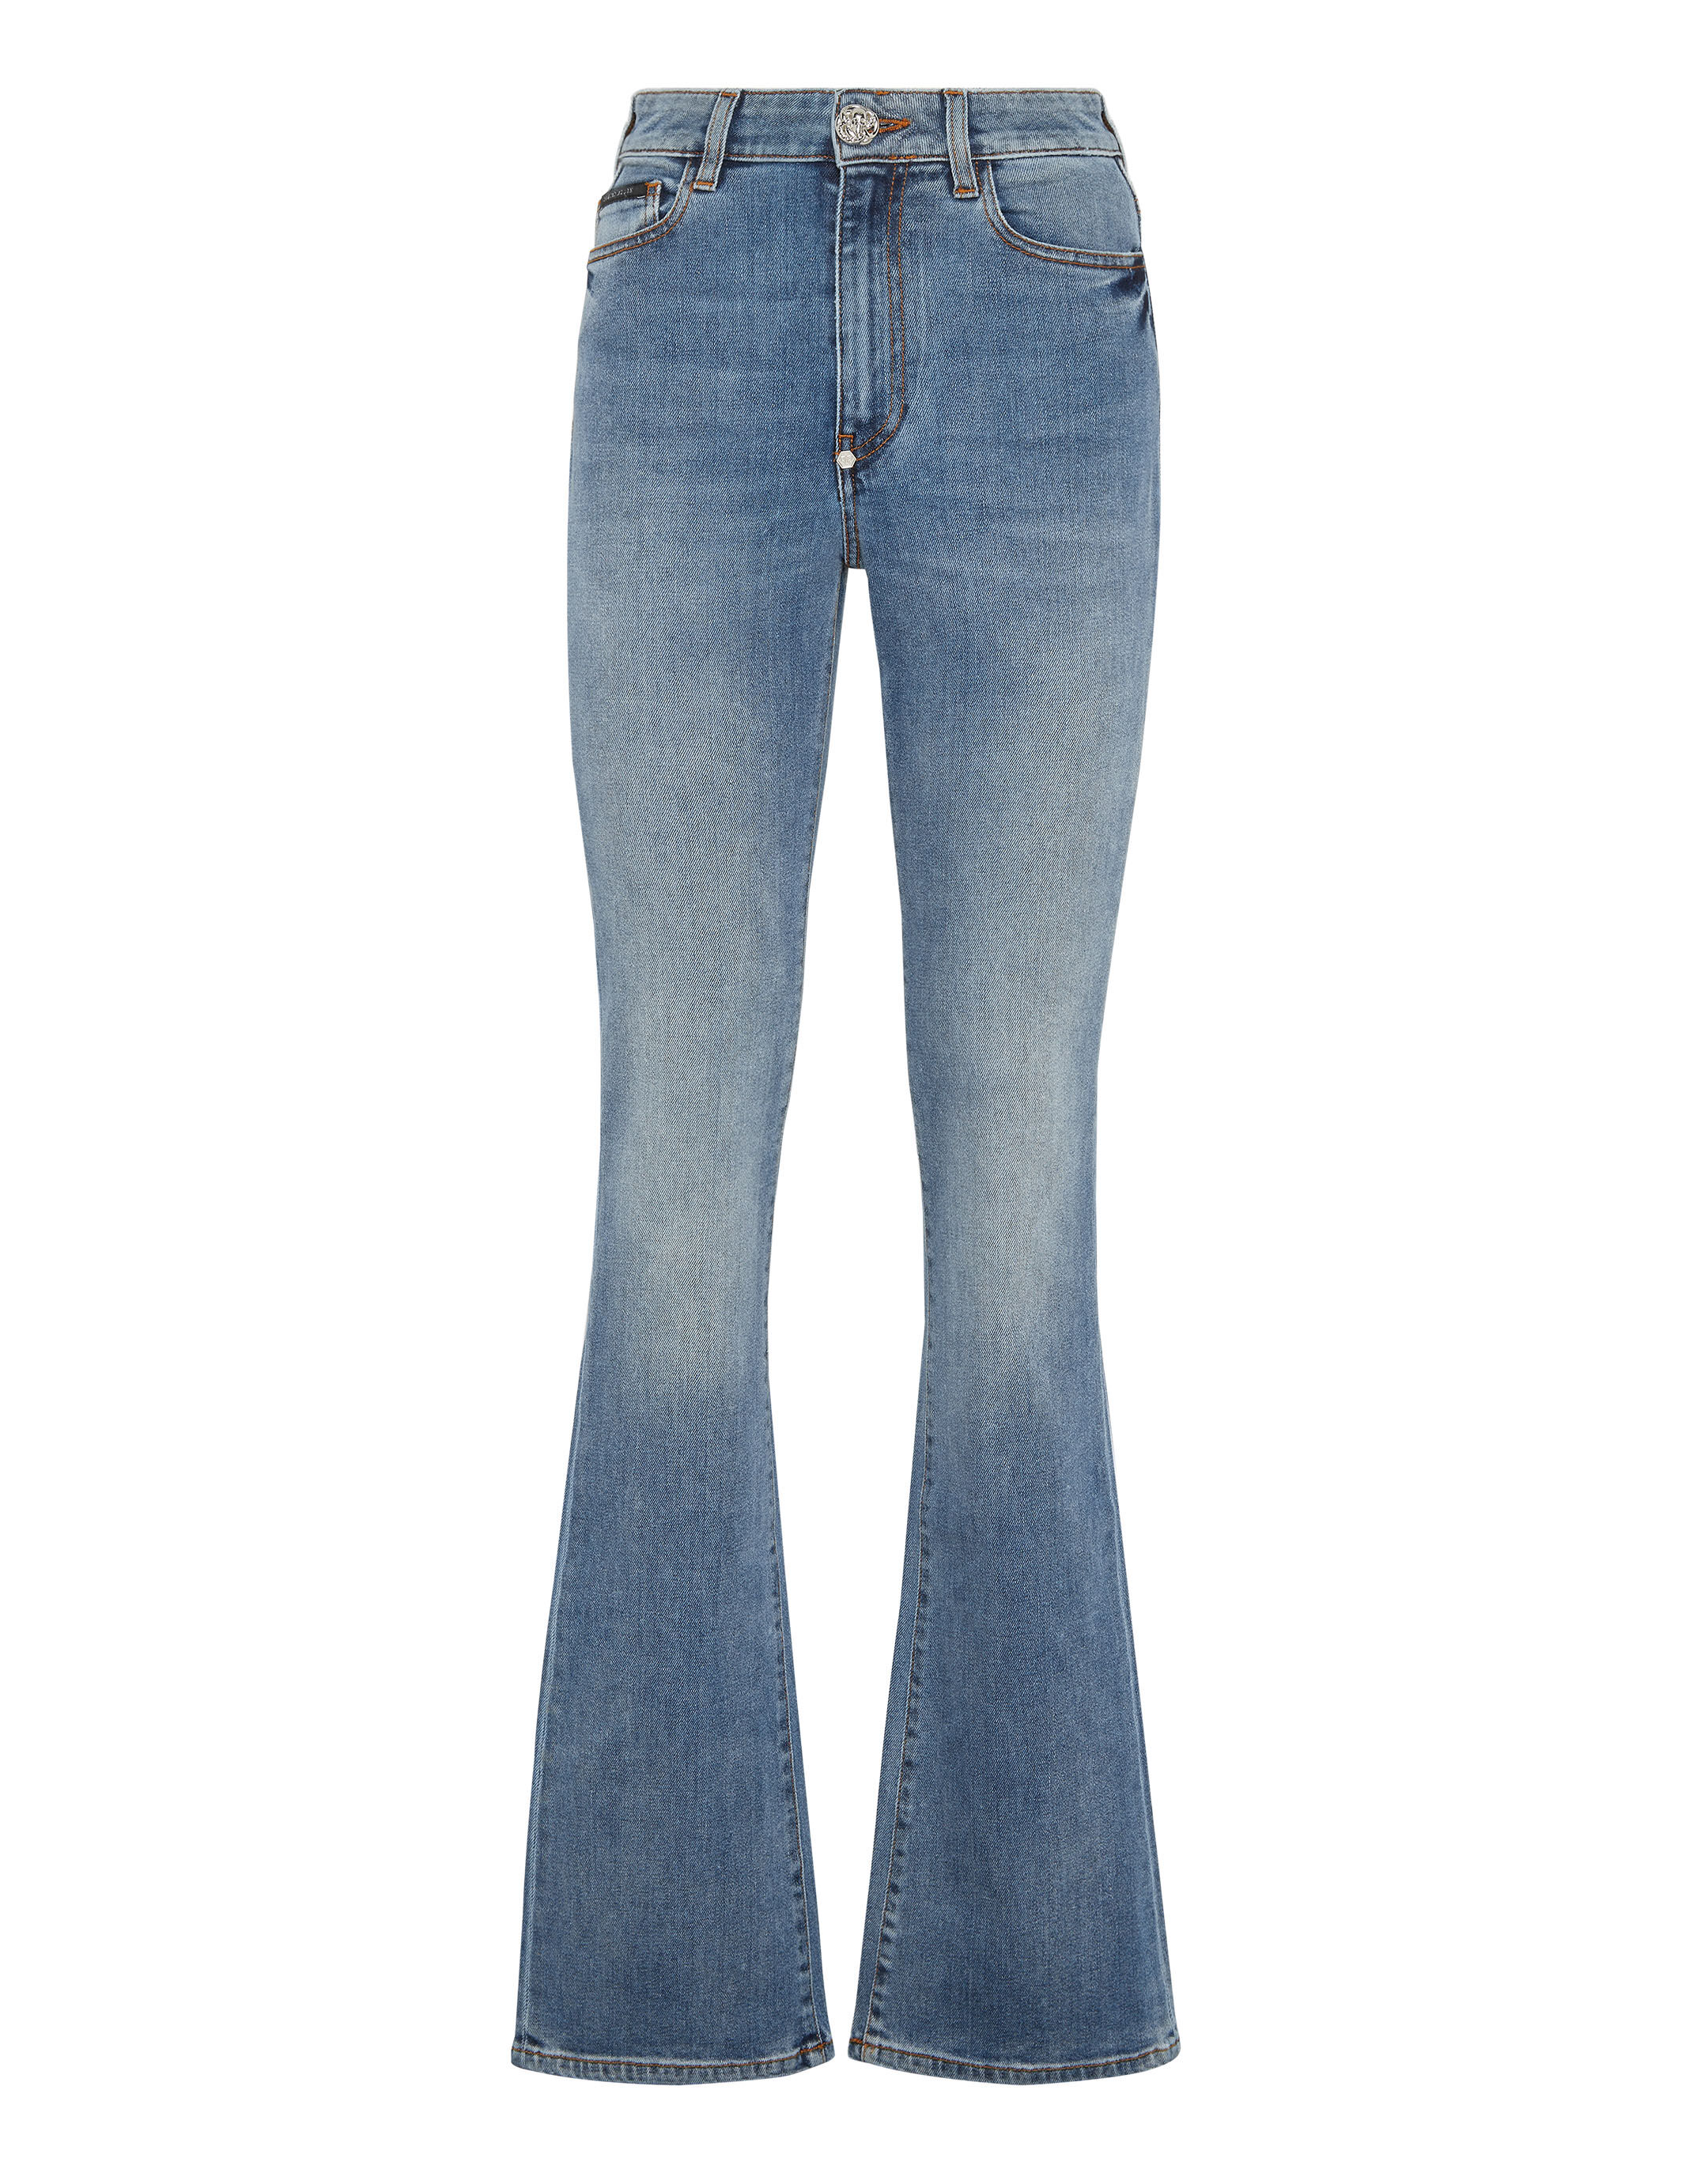 Damen Bekleidung Jeans Röhrenjeans Philipp Plein Denim Andere materialien jeans in Grau 